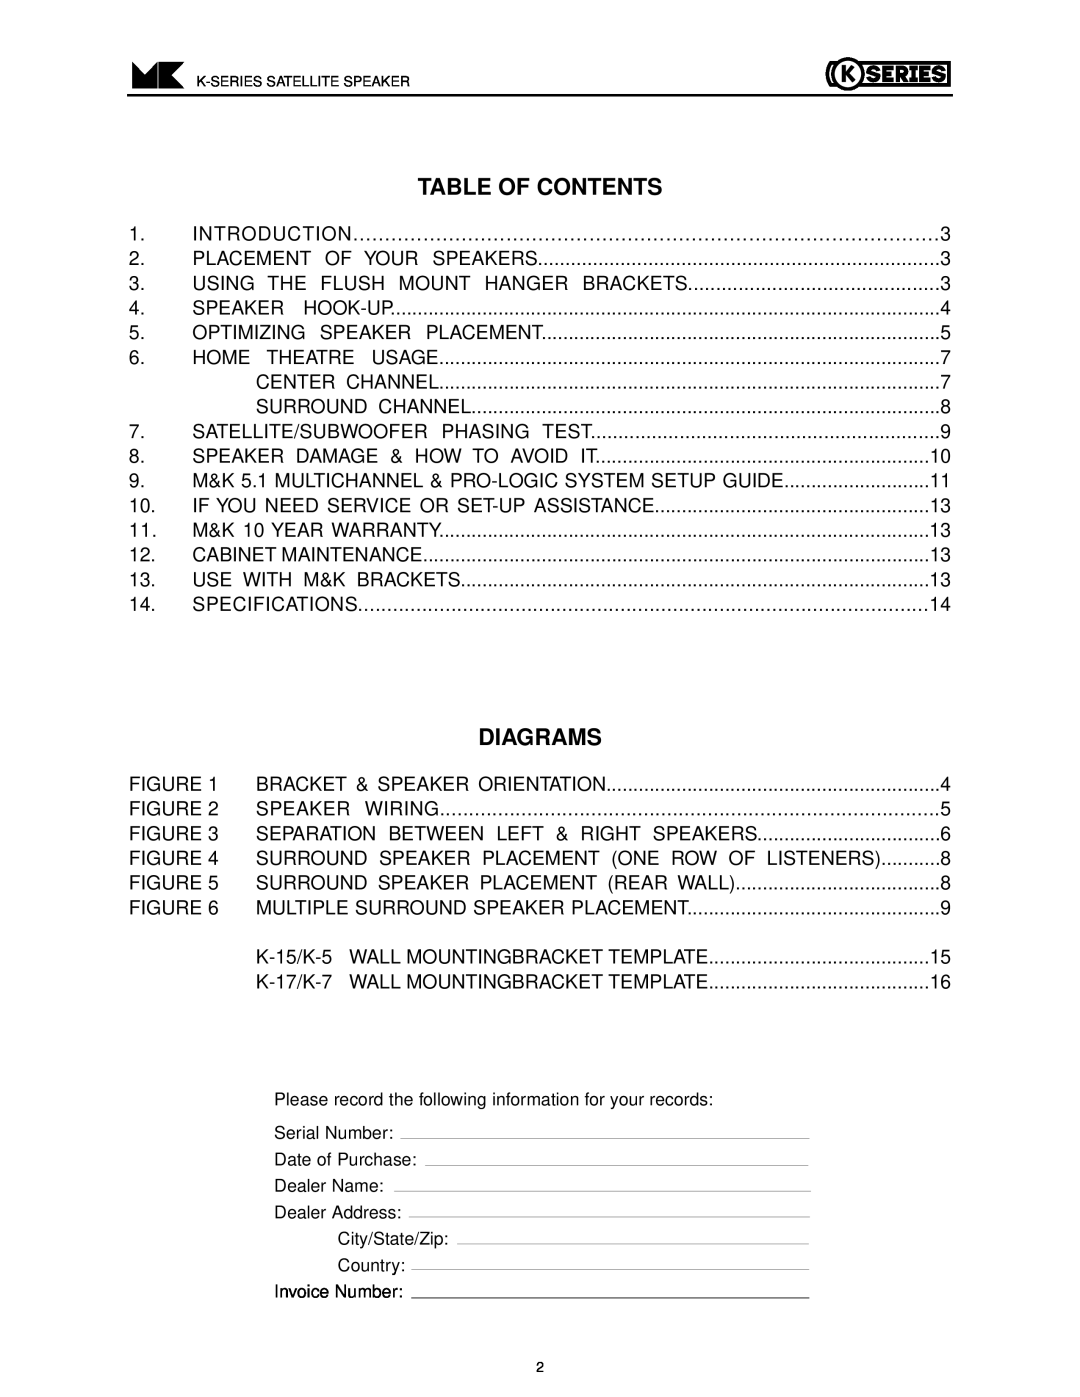 MK Sound K-5, K-17, K-15 K-7 operation manual Table Of Contents, Diagrams 